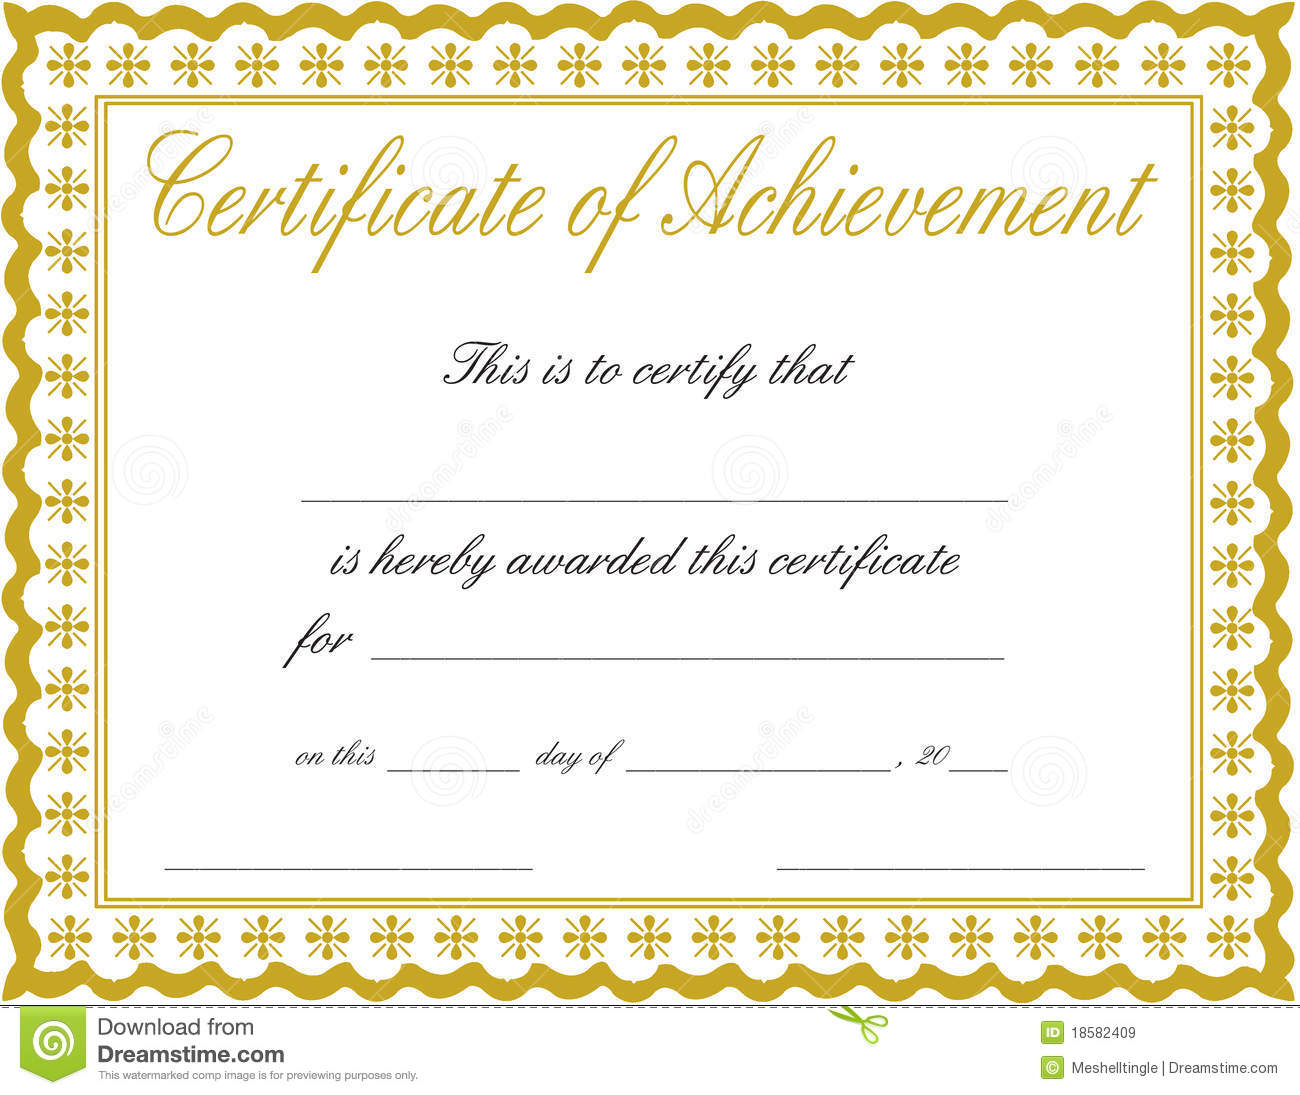 Certificate of achievement stock image